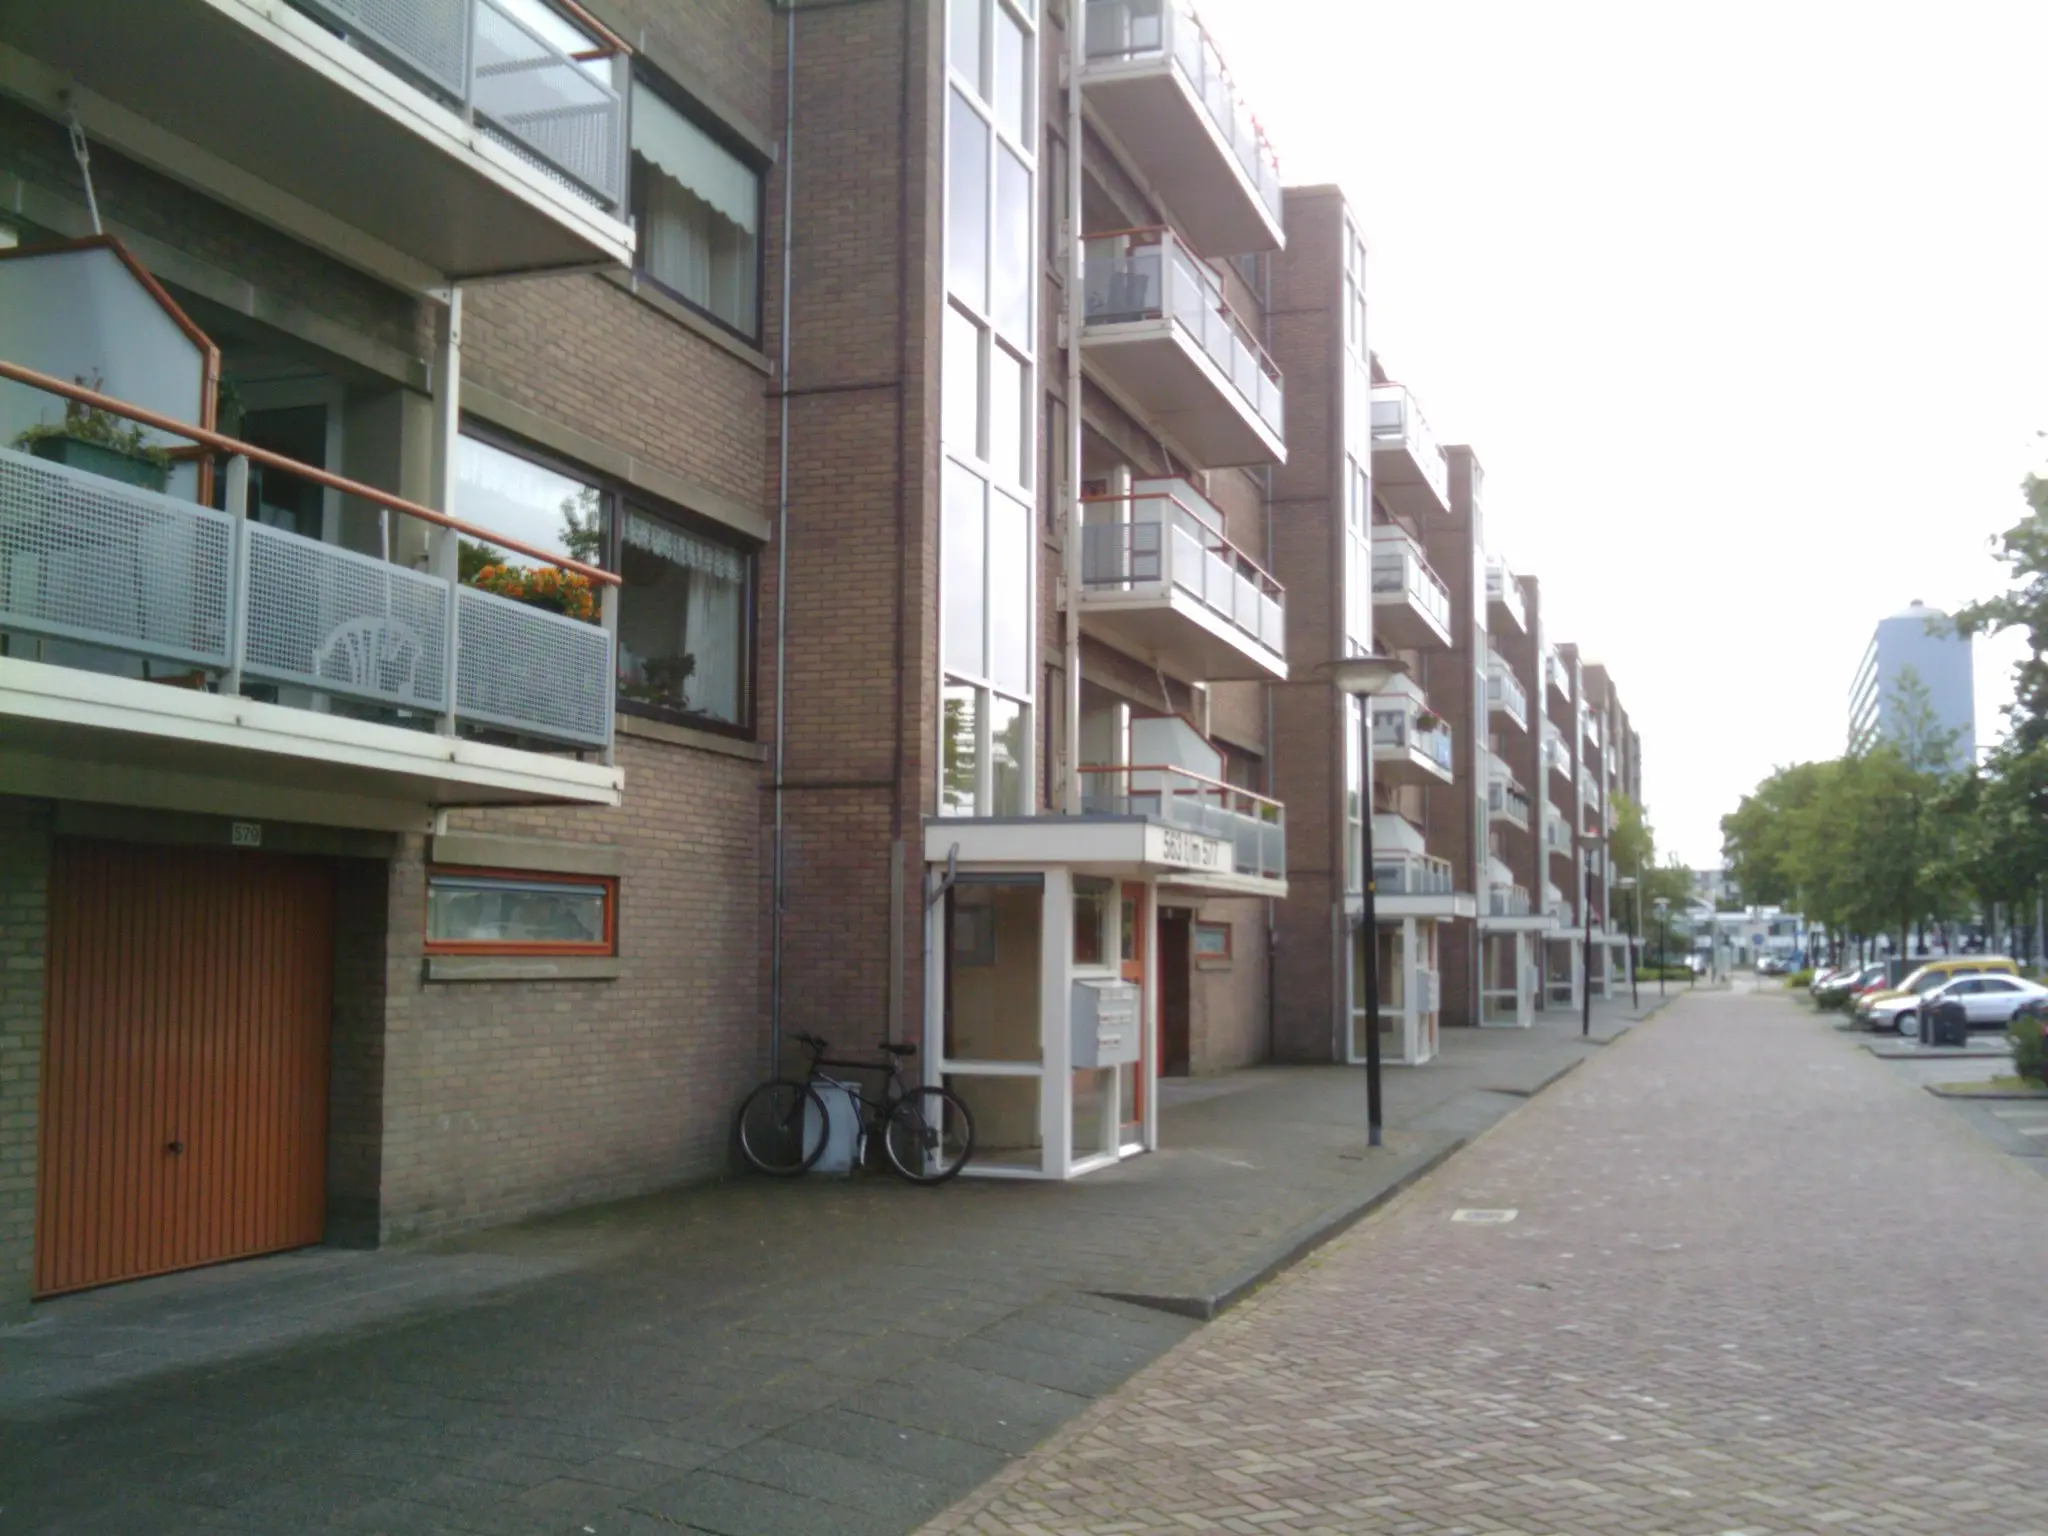 A row of social housing.